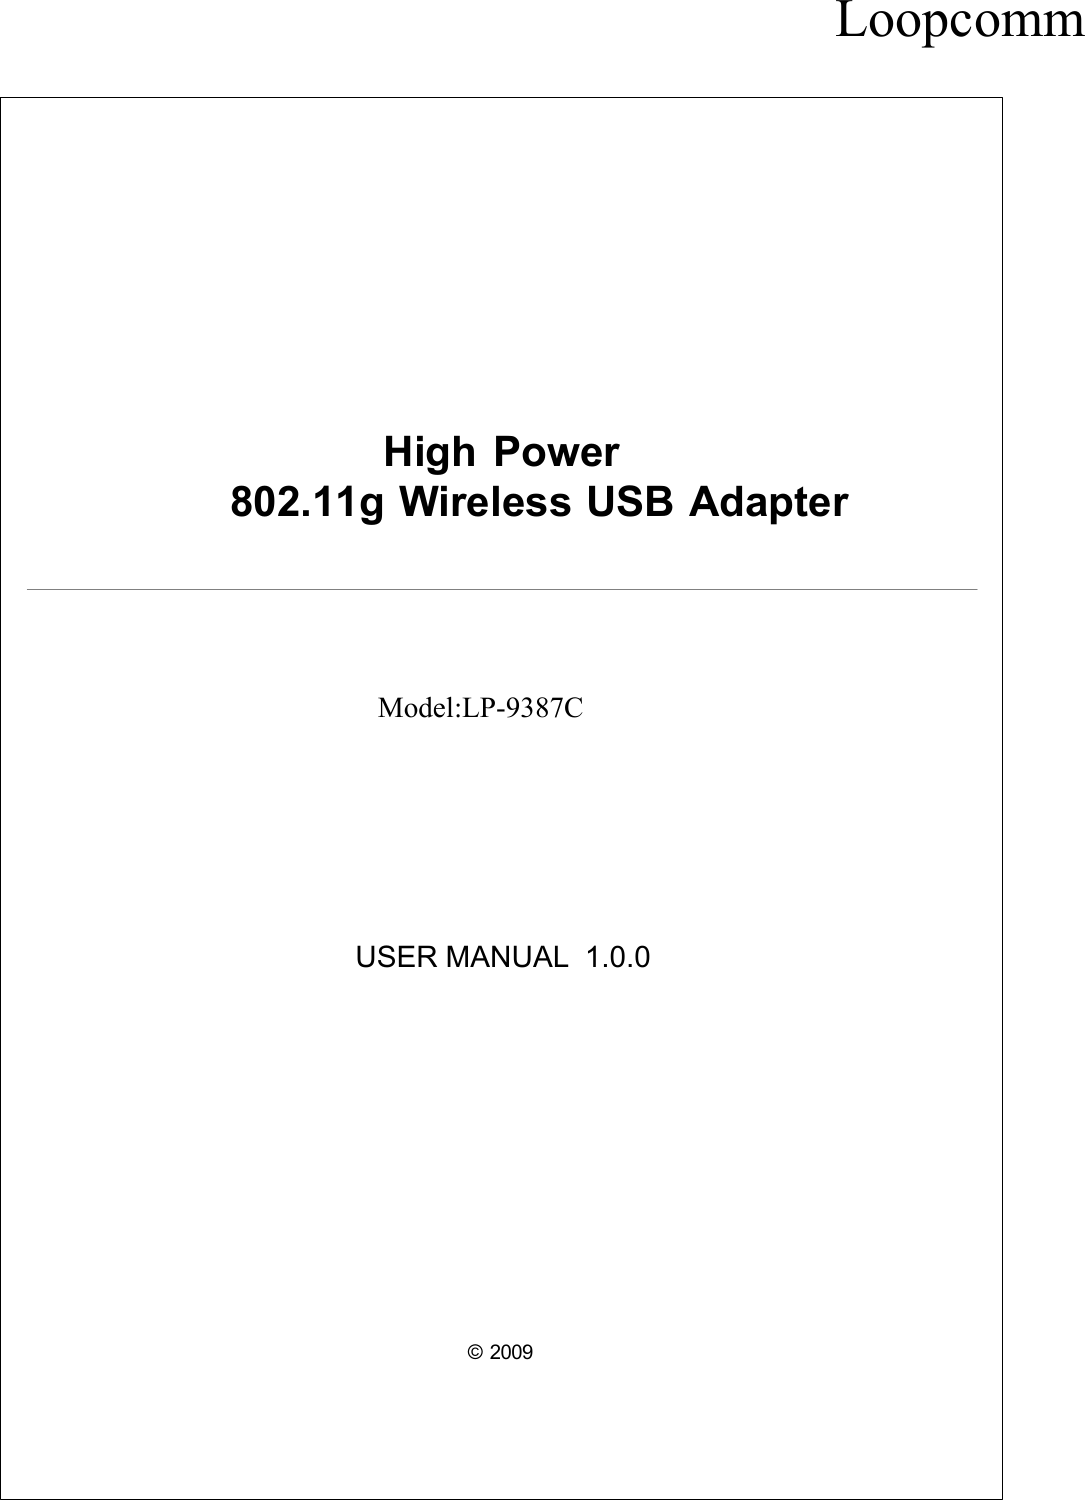 © 2009High Power802.11g Wireless USB AdapterUSER MANUAL  1.0.0Model:LP-9387CLoopcomm